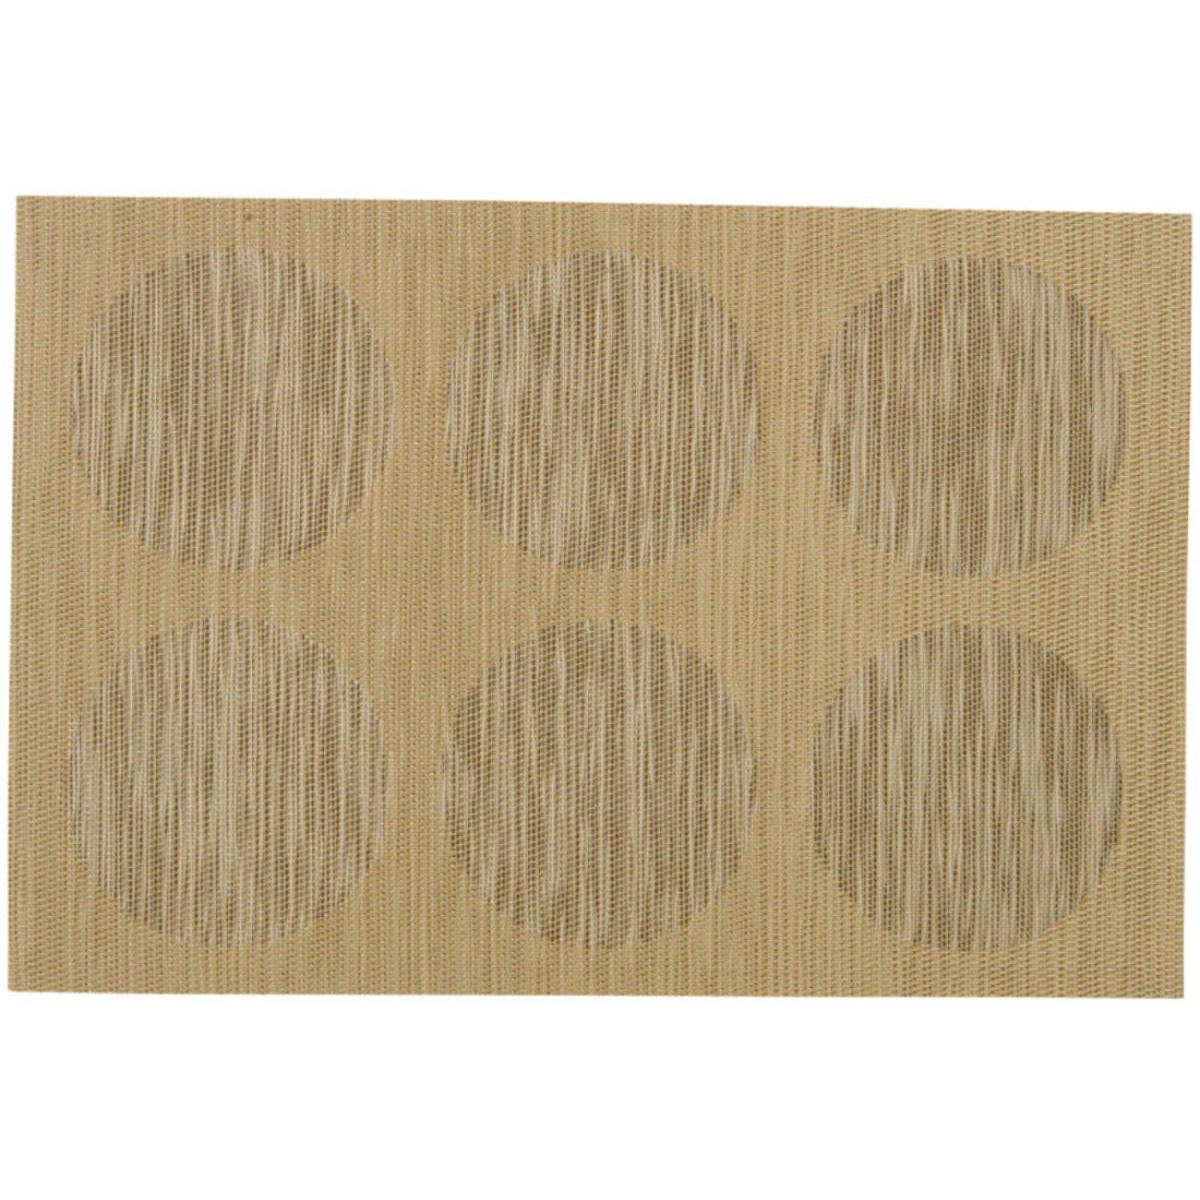 Set de table - Vinyle Polyester - 30 x 45 cm - Marron